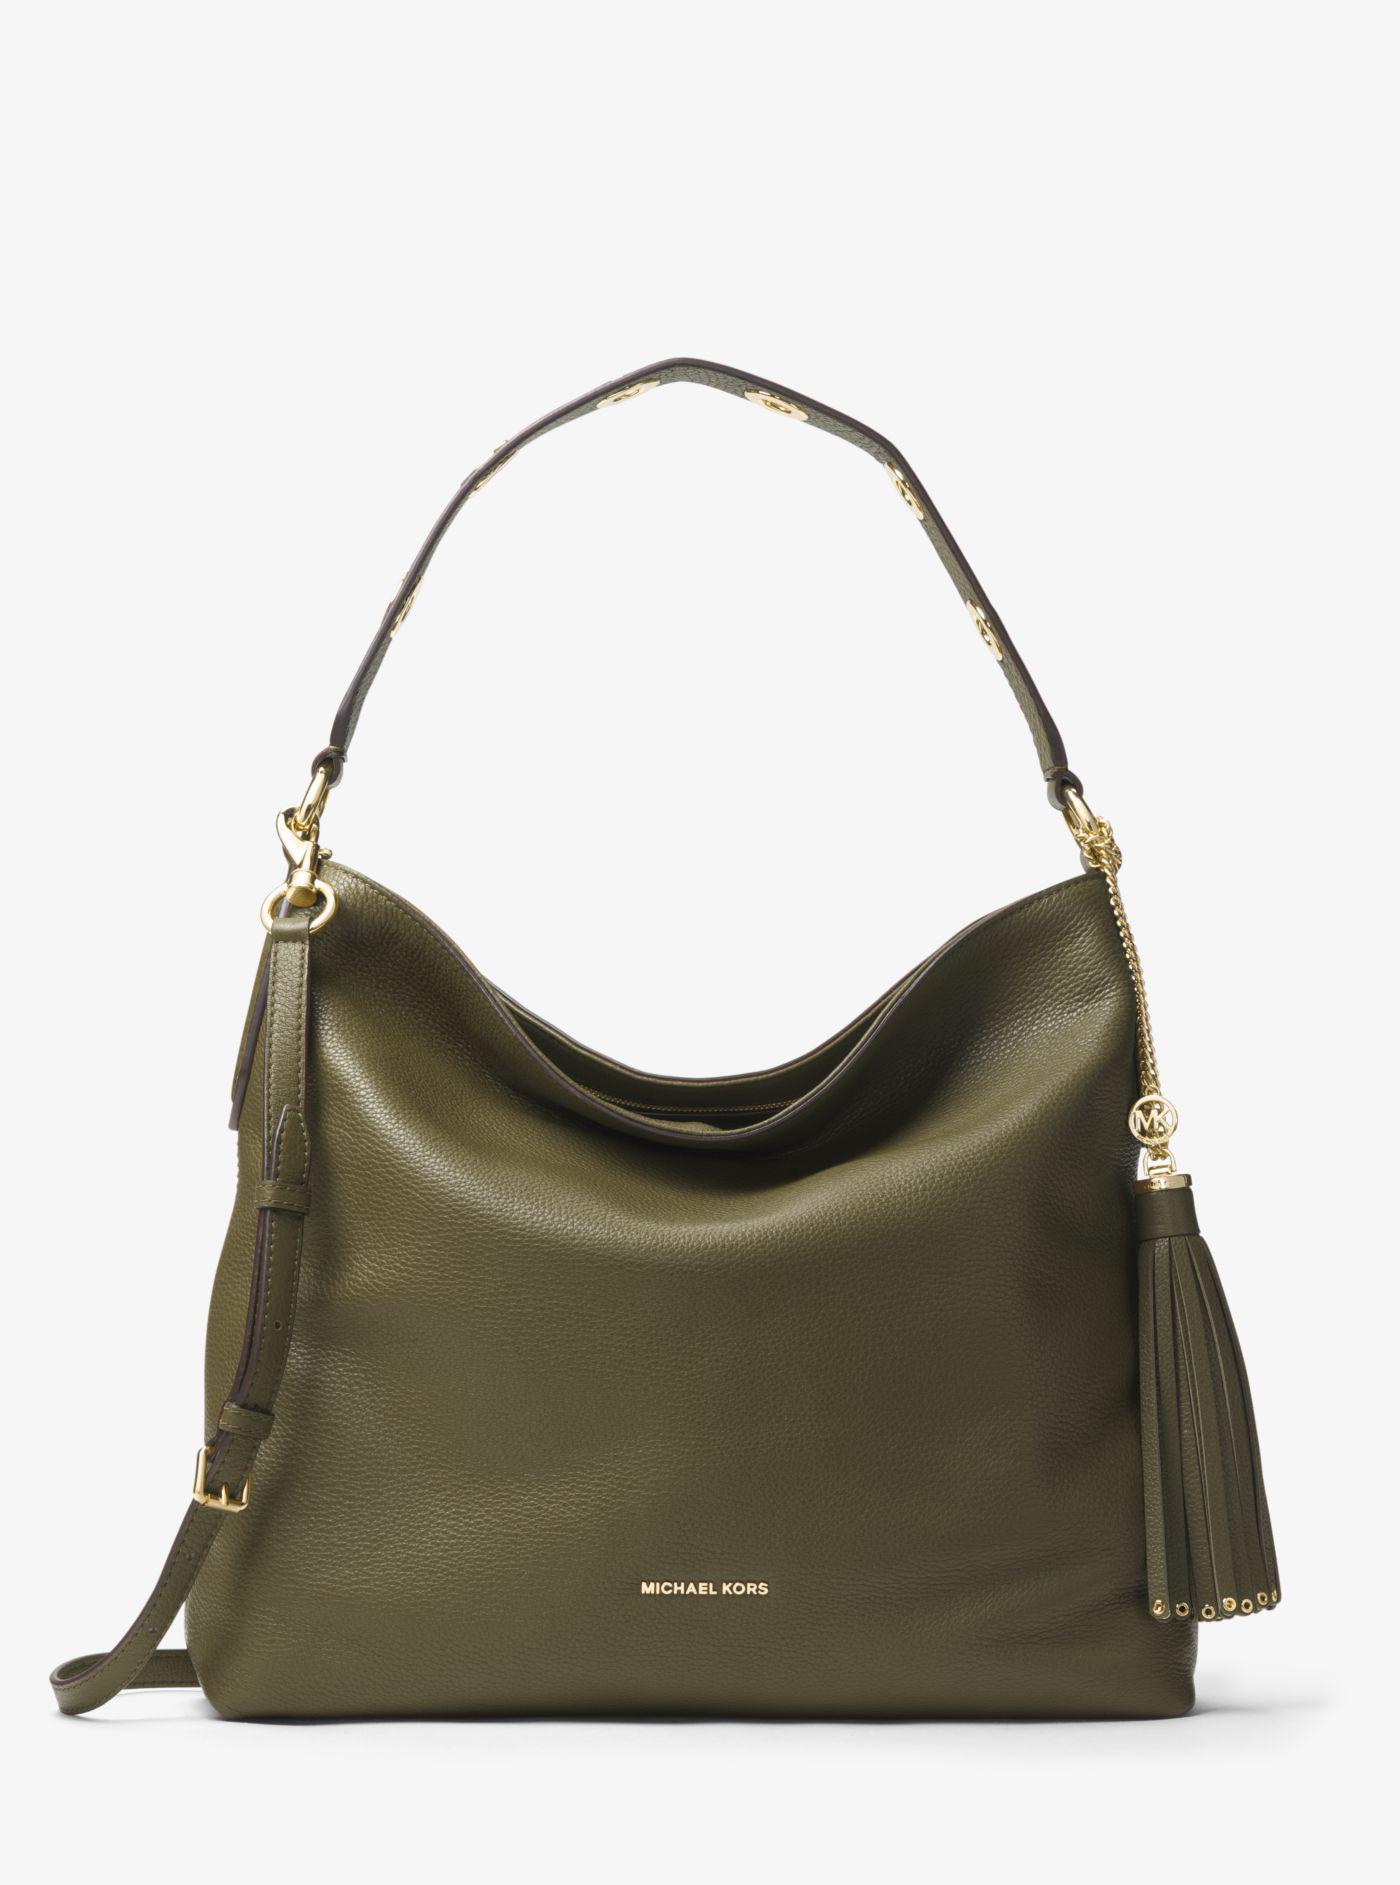 Michael Kors Brooklyn Large Leather Shoulder Bag in Olive (Green) - Lyst